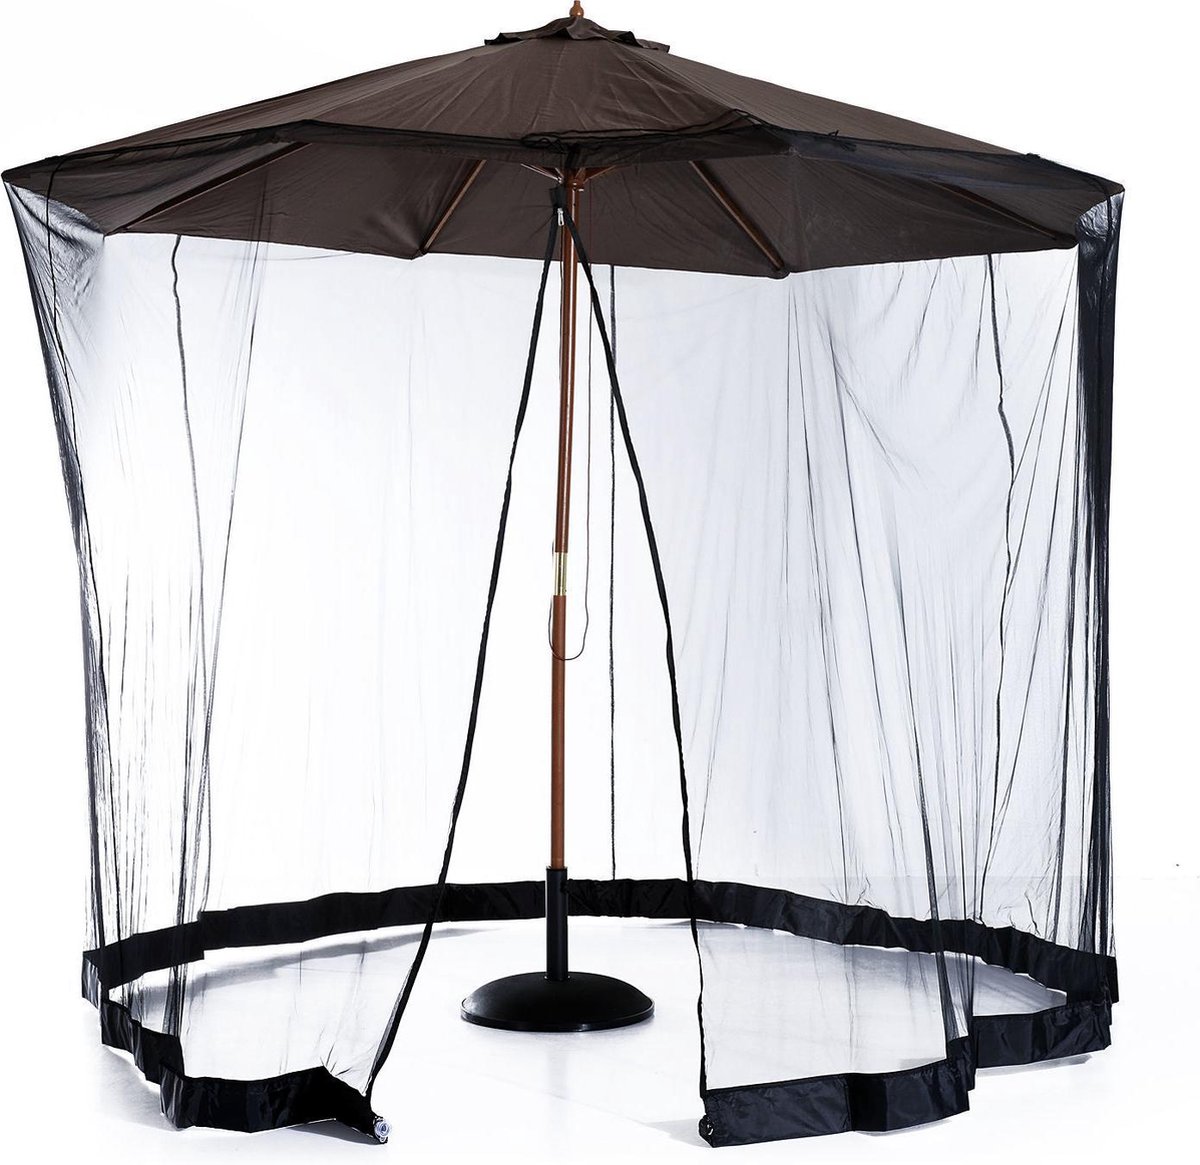 Outsunny Insectennet klamboe voor parasol 3m zwart | bol.com